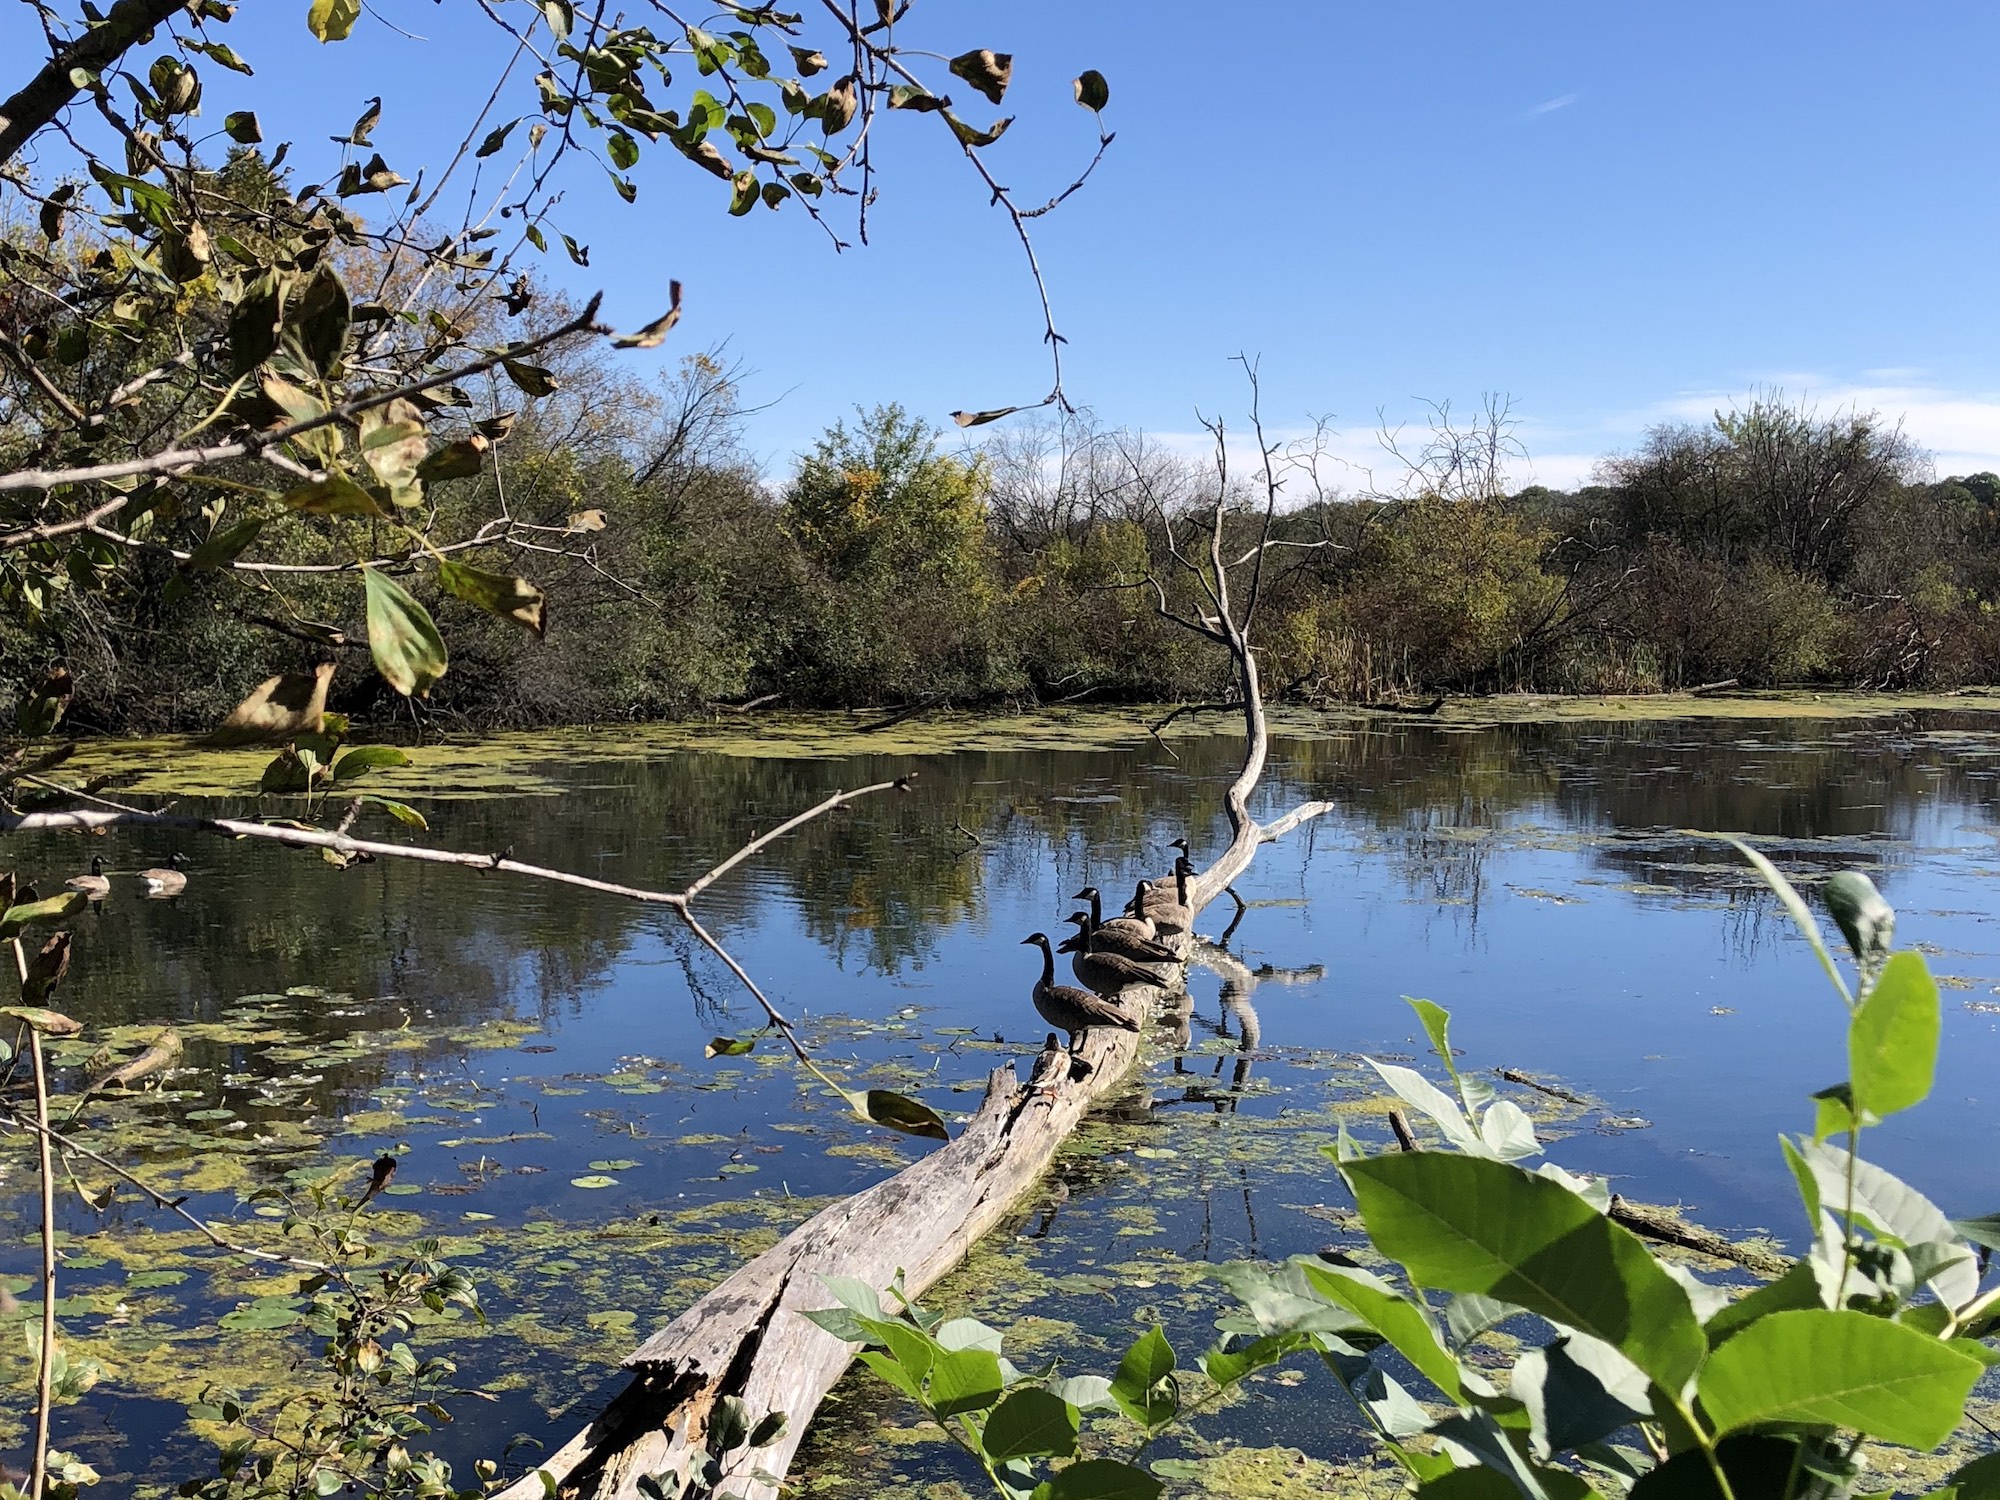 Canada Geese in Ho-Nee-Um Pond in the UW Arboretum on October 4, 2018.